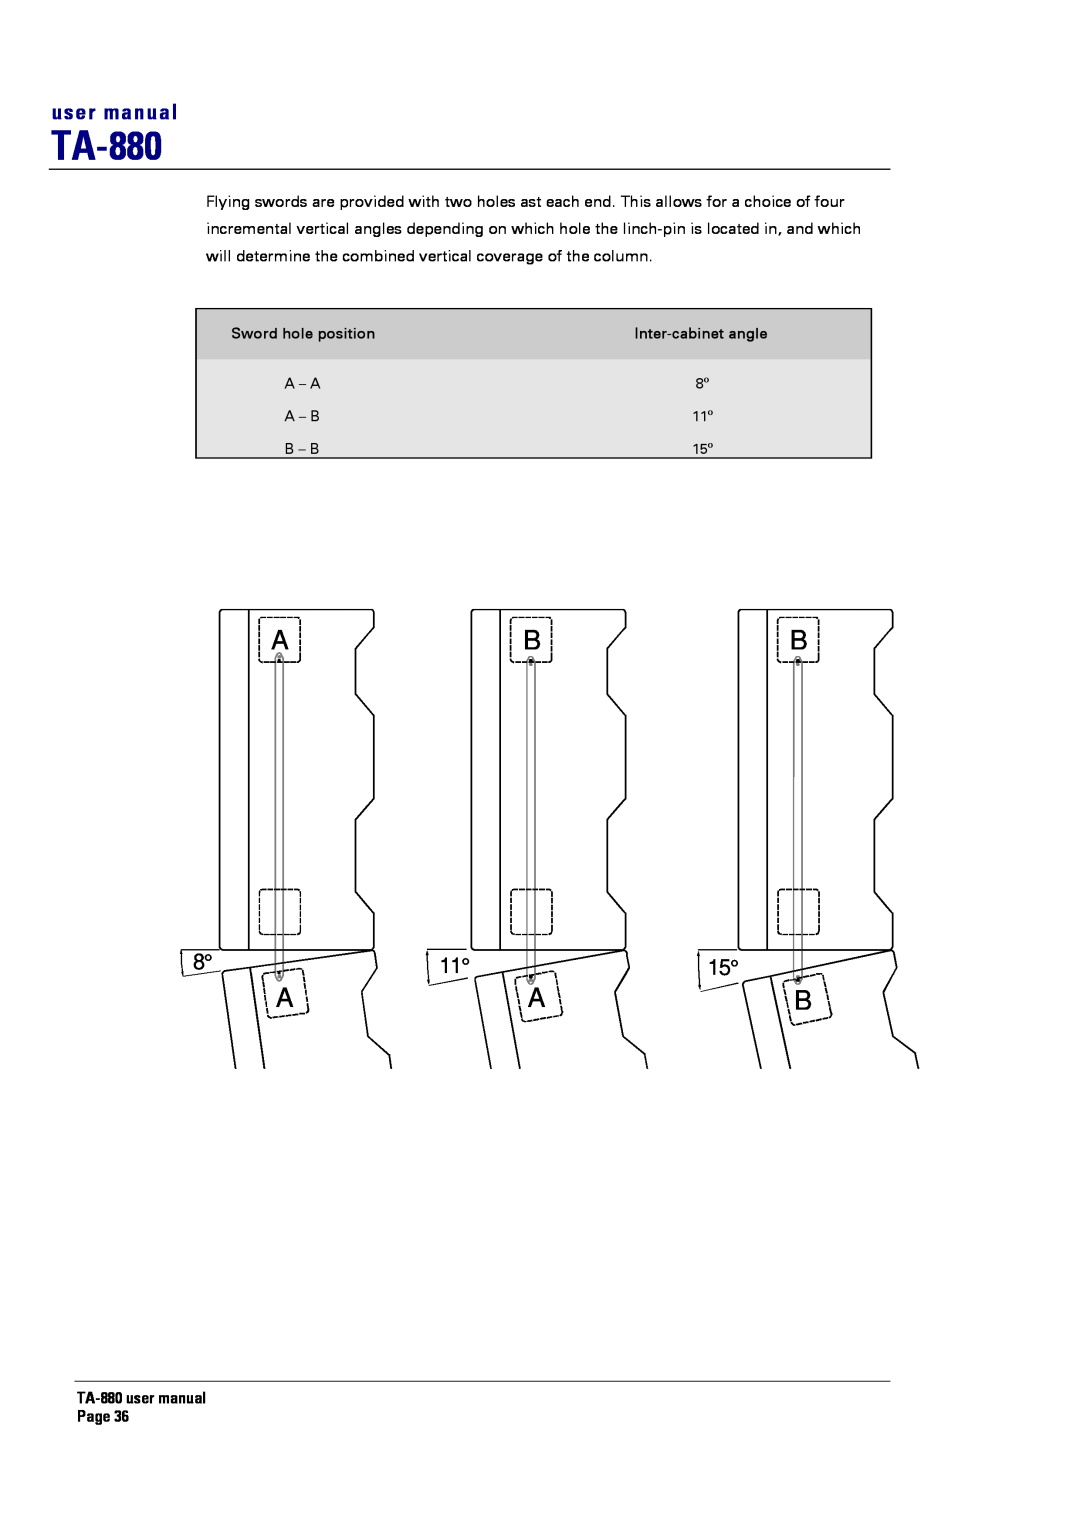 Turbosound TA-880 user manual Sword hole position, Inter-cabinetangle, A B B 